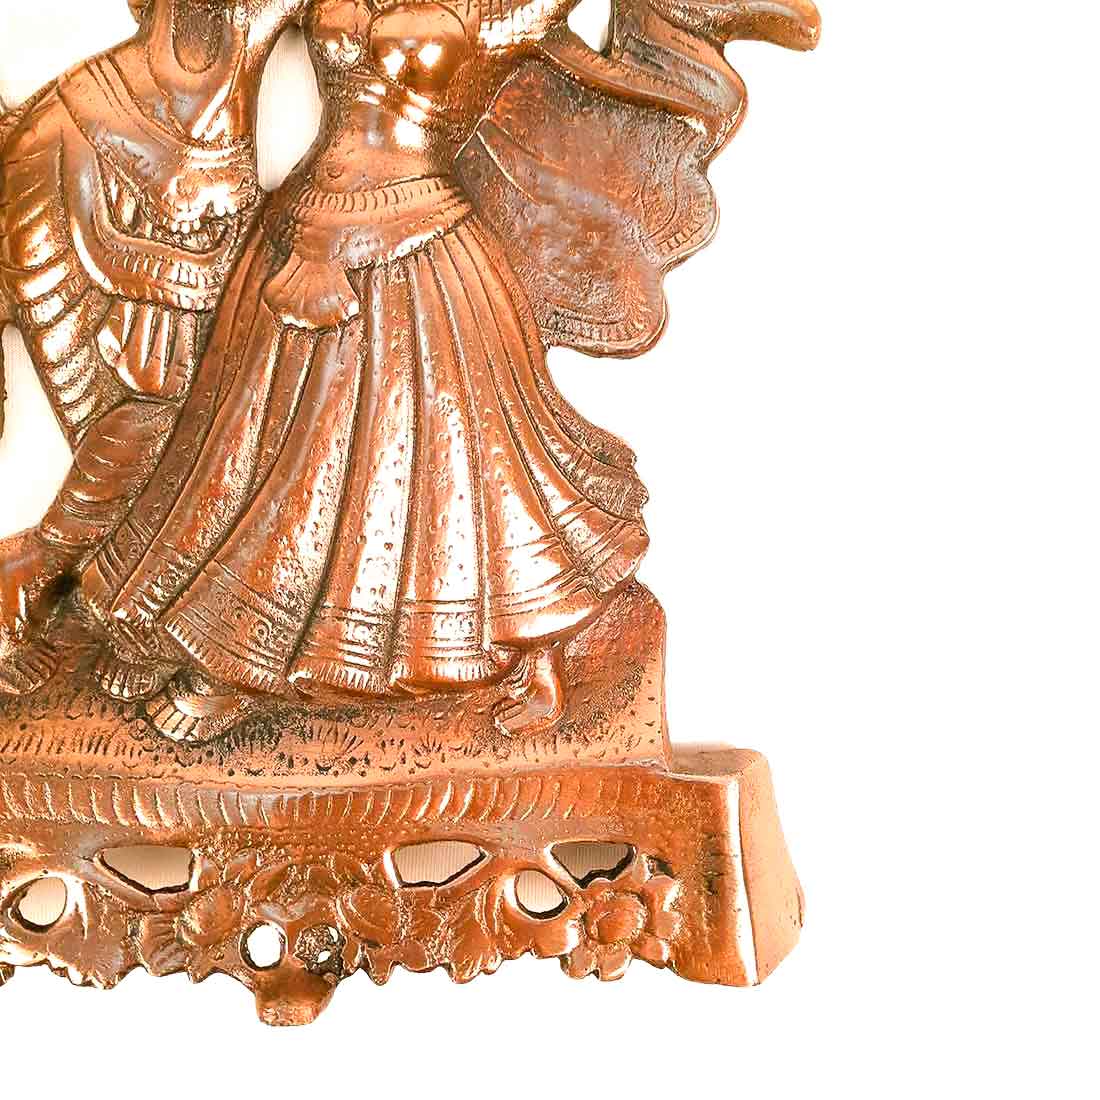 Radha Krishna Wall Hanging Idol | Shri Radha Krishna Playing Flute Wall Hanging Art Statue Murti | Religious & Spiritual Sculpture - for Gift, Home, Living Room, Office, Puja Room Decoration   -  11 Inch